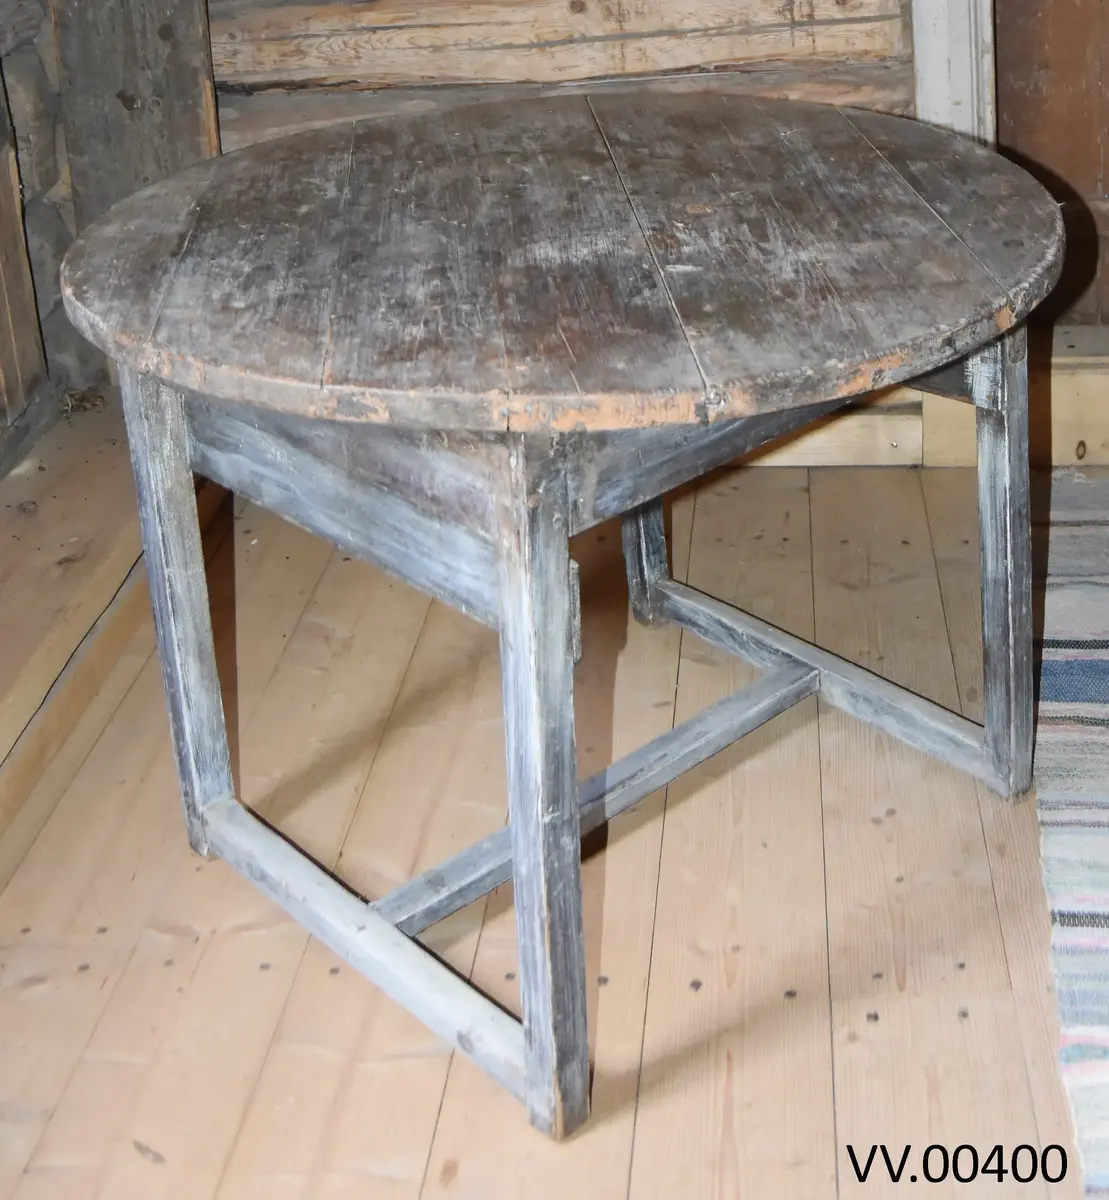 Form: Rund bordplate, rektangulær fot
